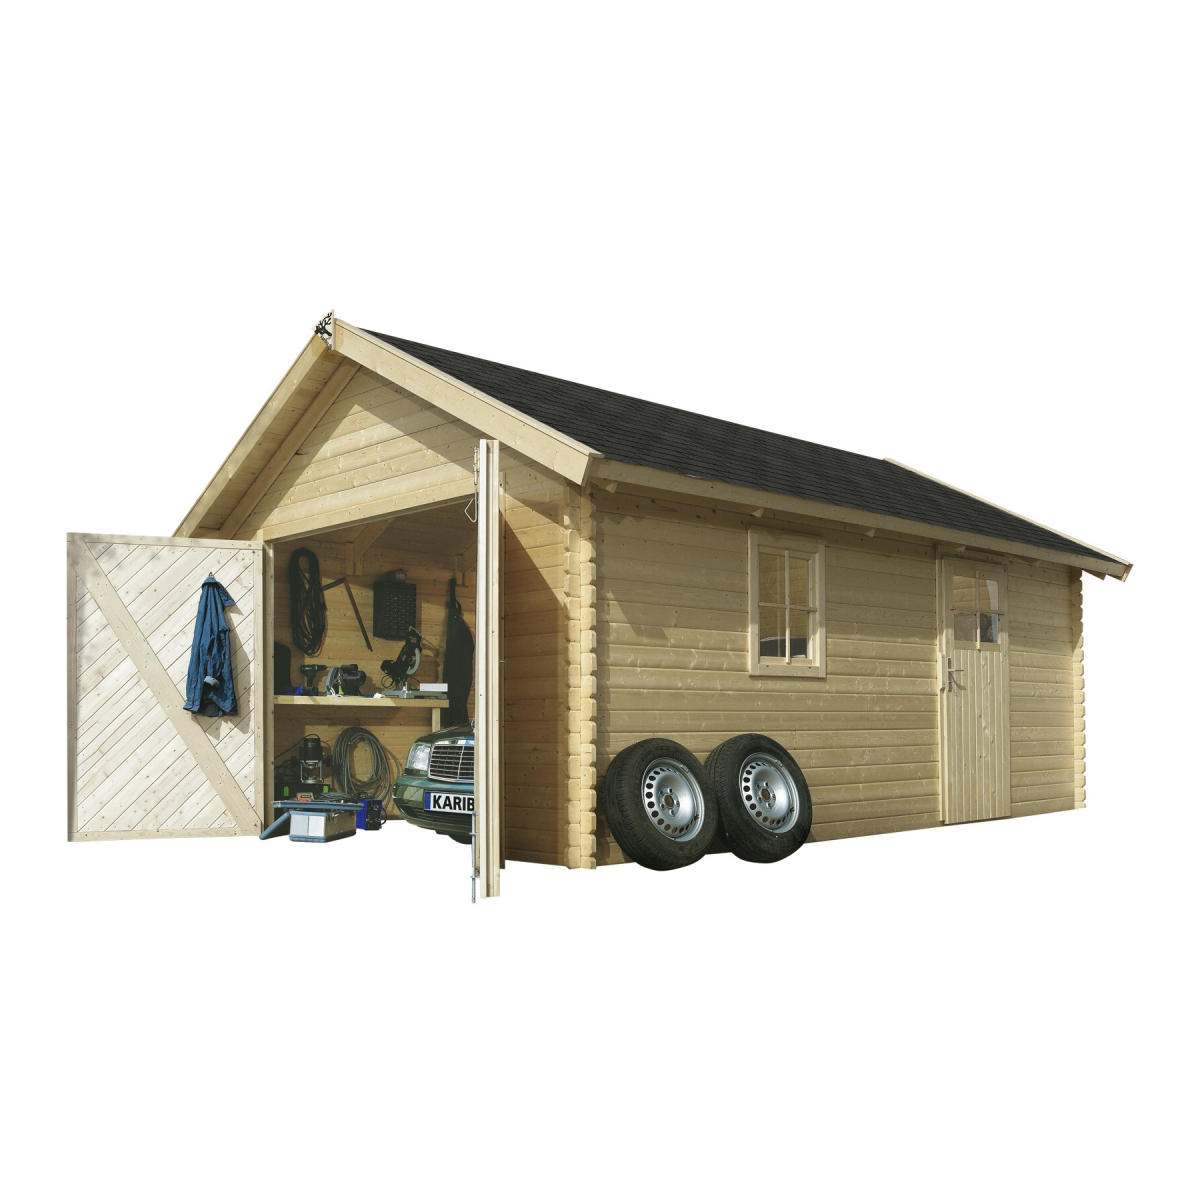 LANIT PLAST dřevěná garáž KARIBU 43545 40 mm natur LG1887